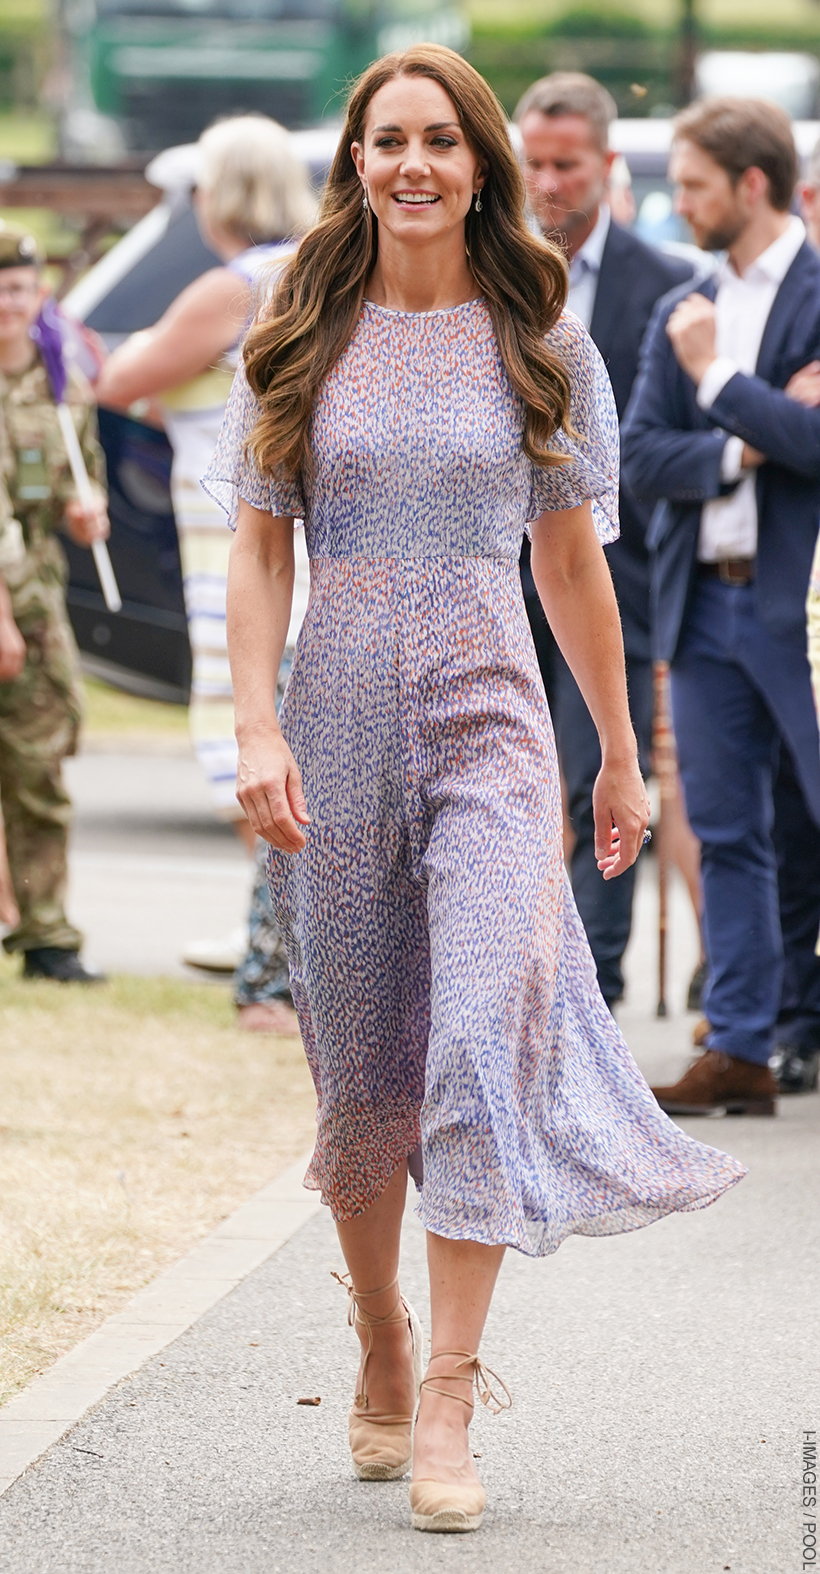 Kate Middleton wearing the L.K. Bennett Madison dress in lilac